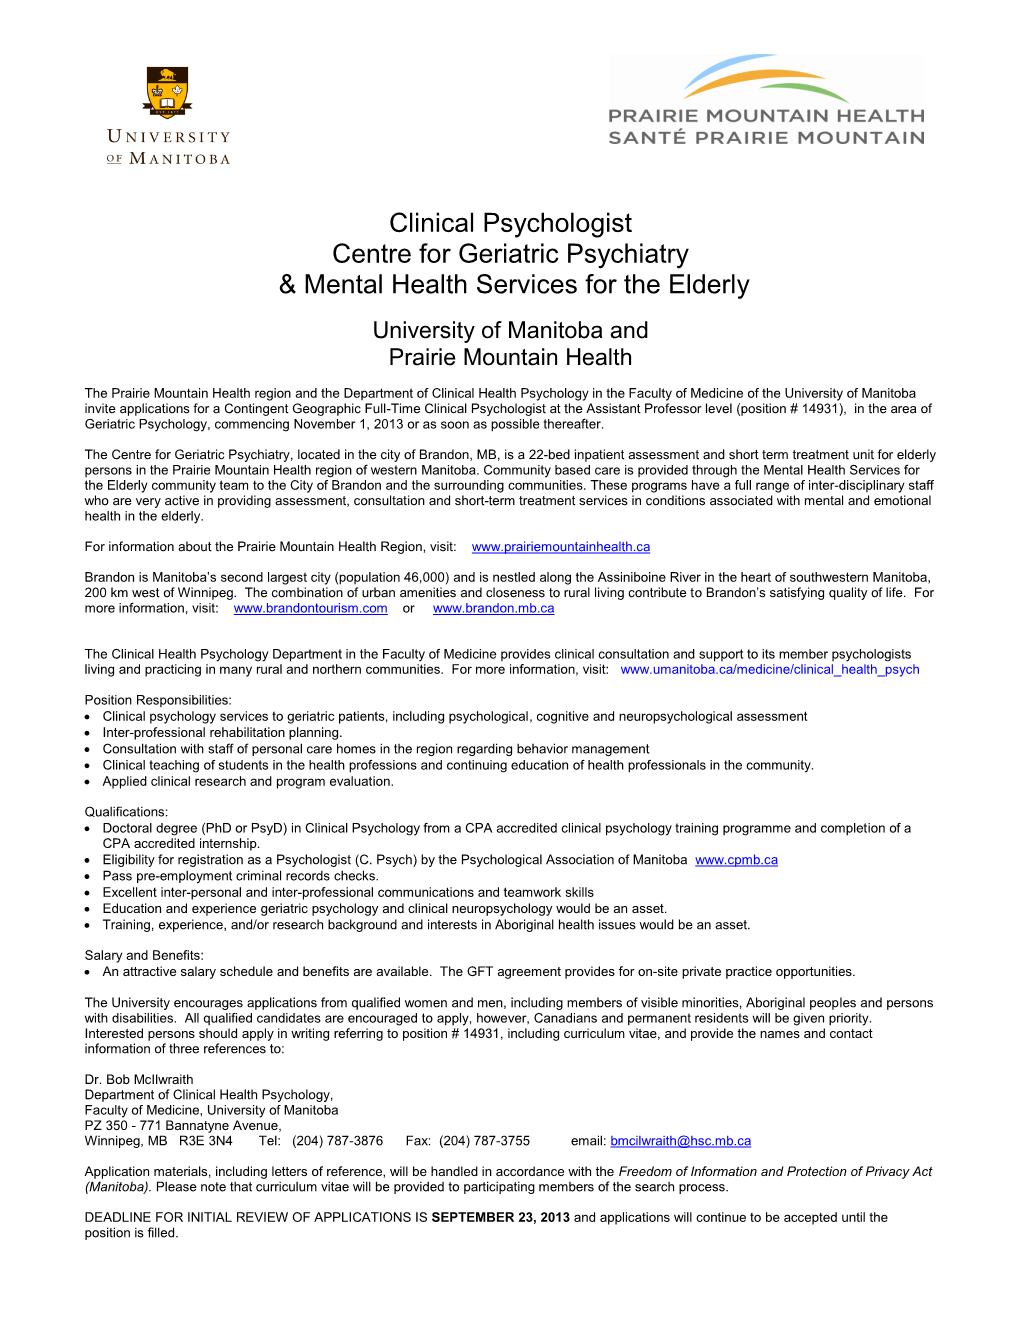 Children's Health Psychology / Neuropsychology / Mental Health